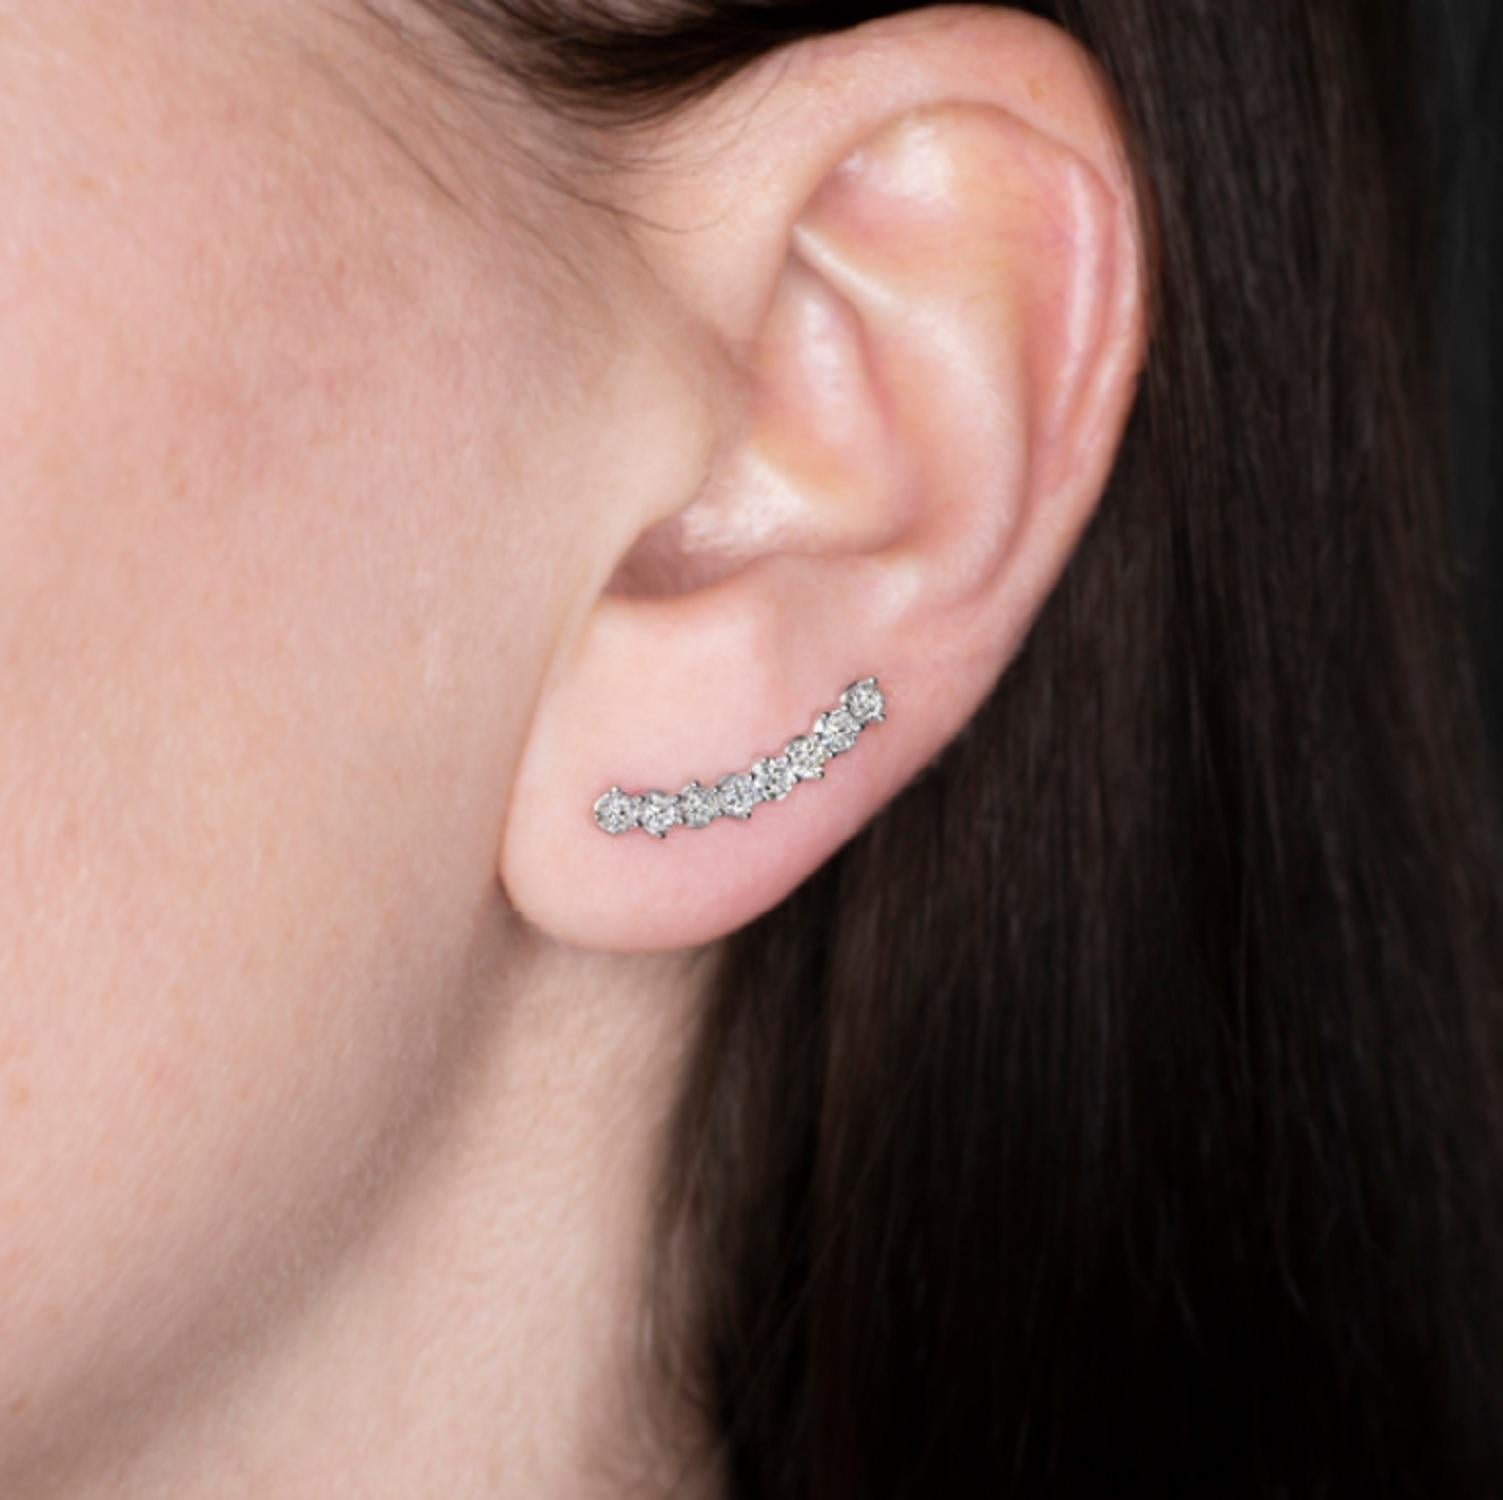 Very modern and versatile 1 carat diamond ear climber
si2 si3 clarity 100% eye clean
G/H Color
